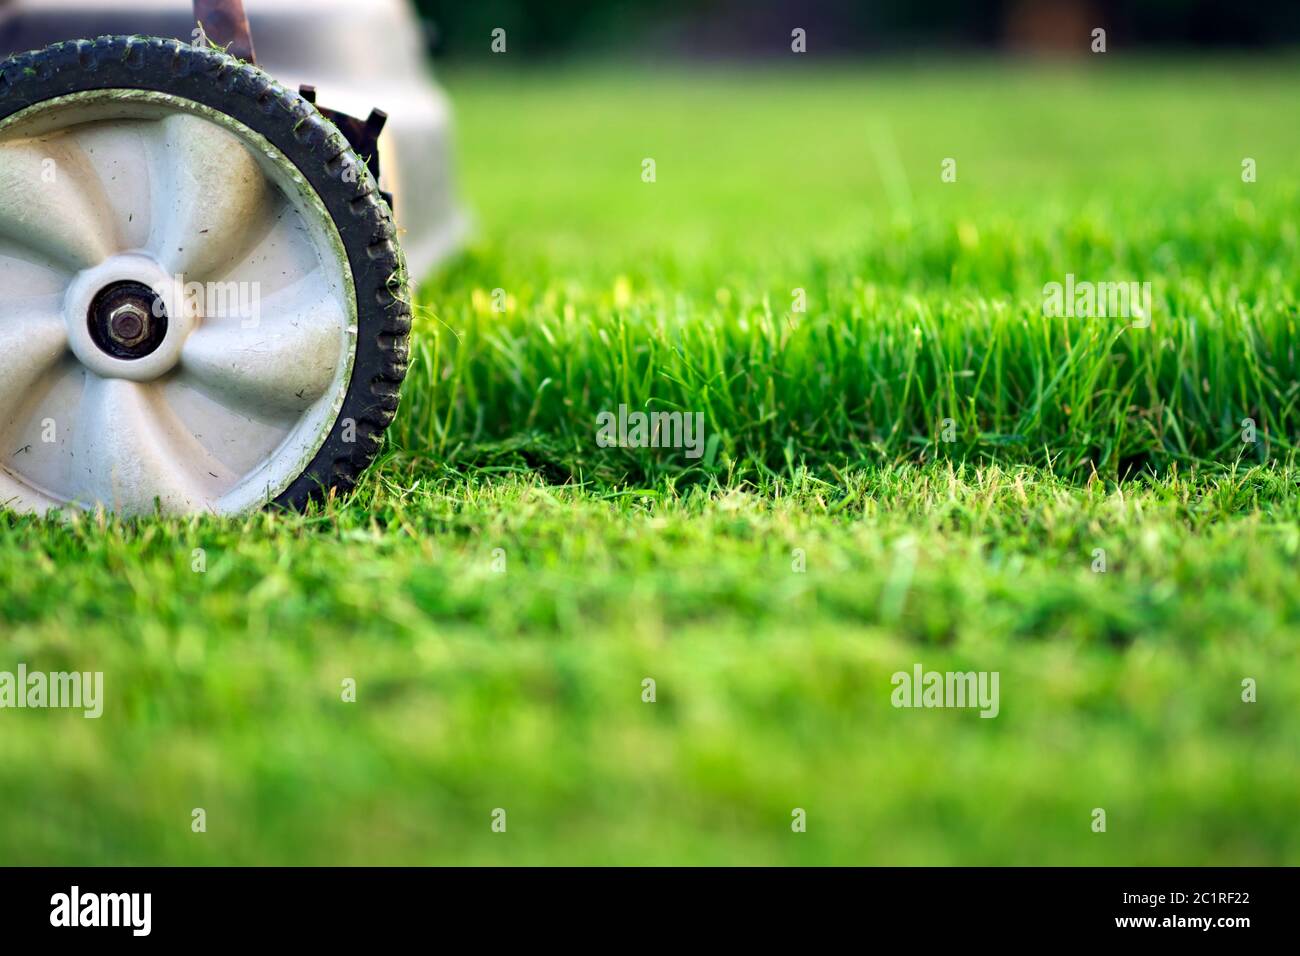 Lawn mower cutting green grass Stock Photo